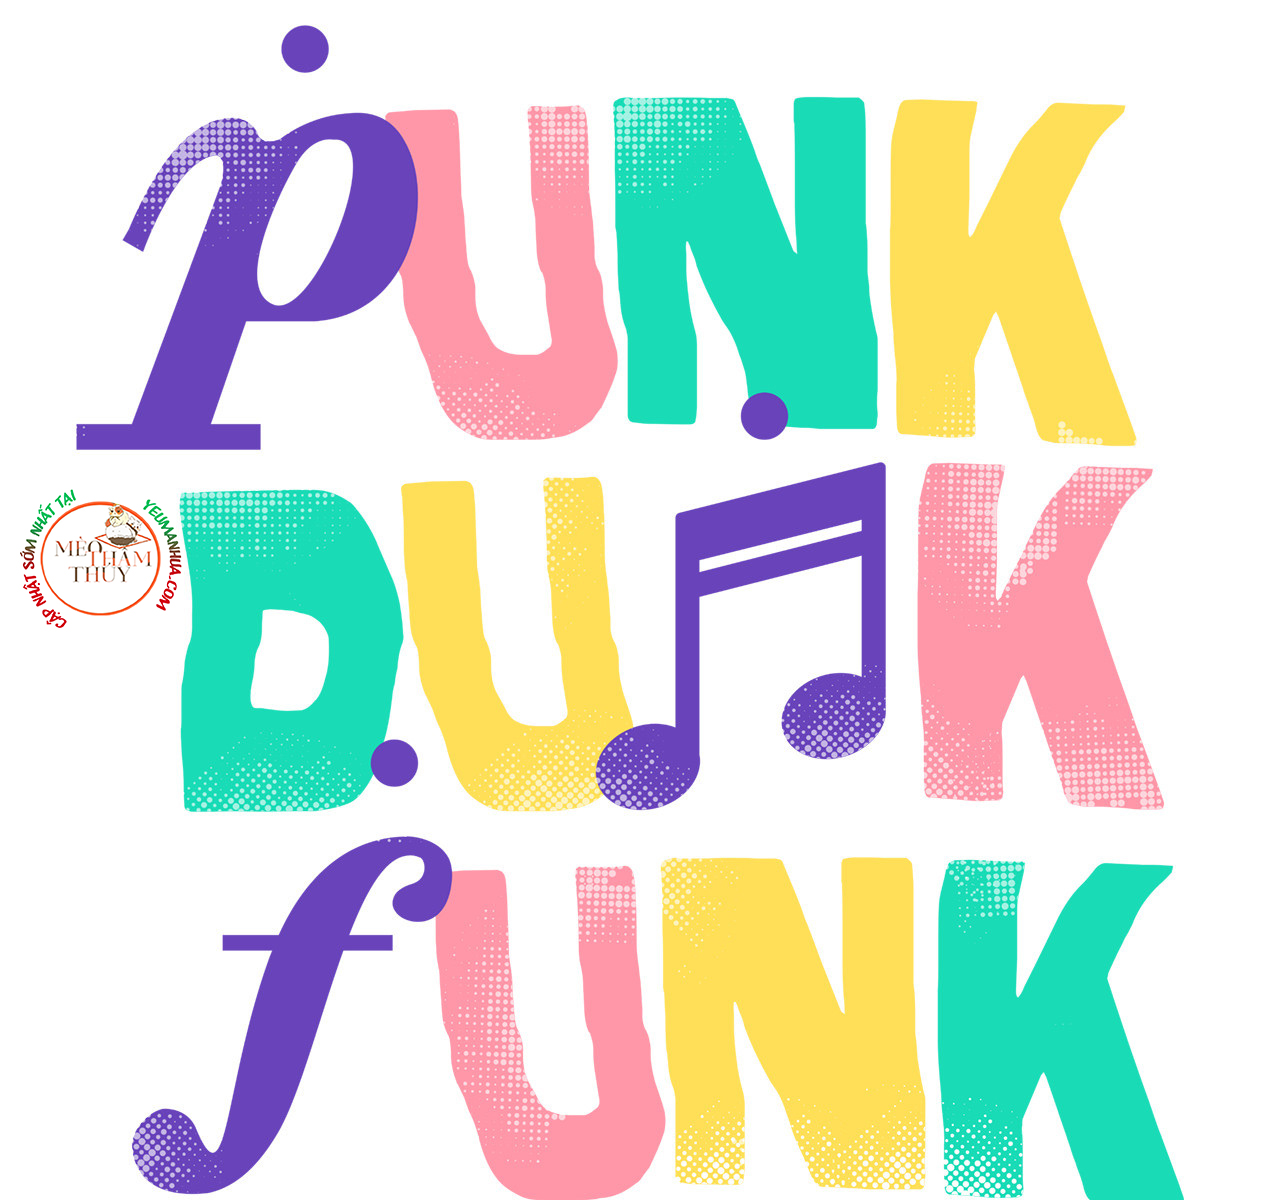 [18+] Punk Dunk Funk